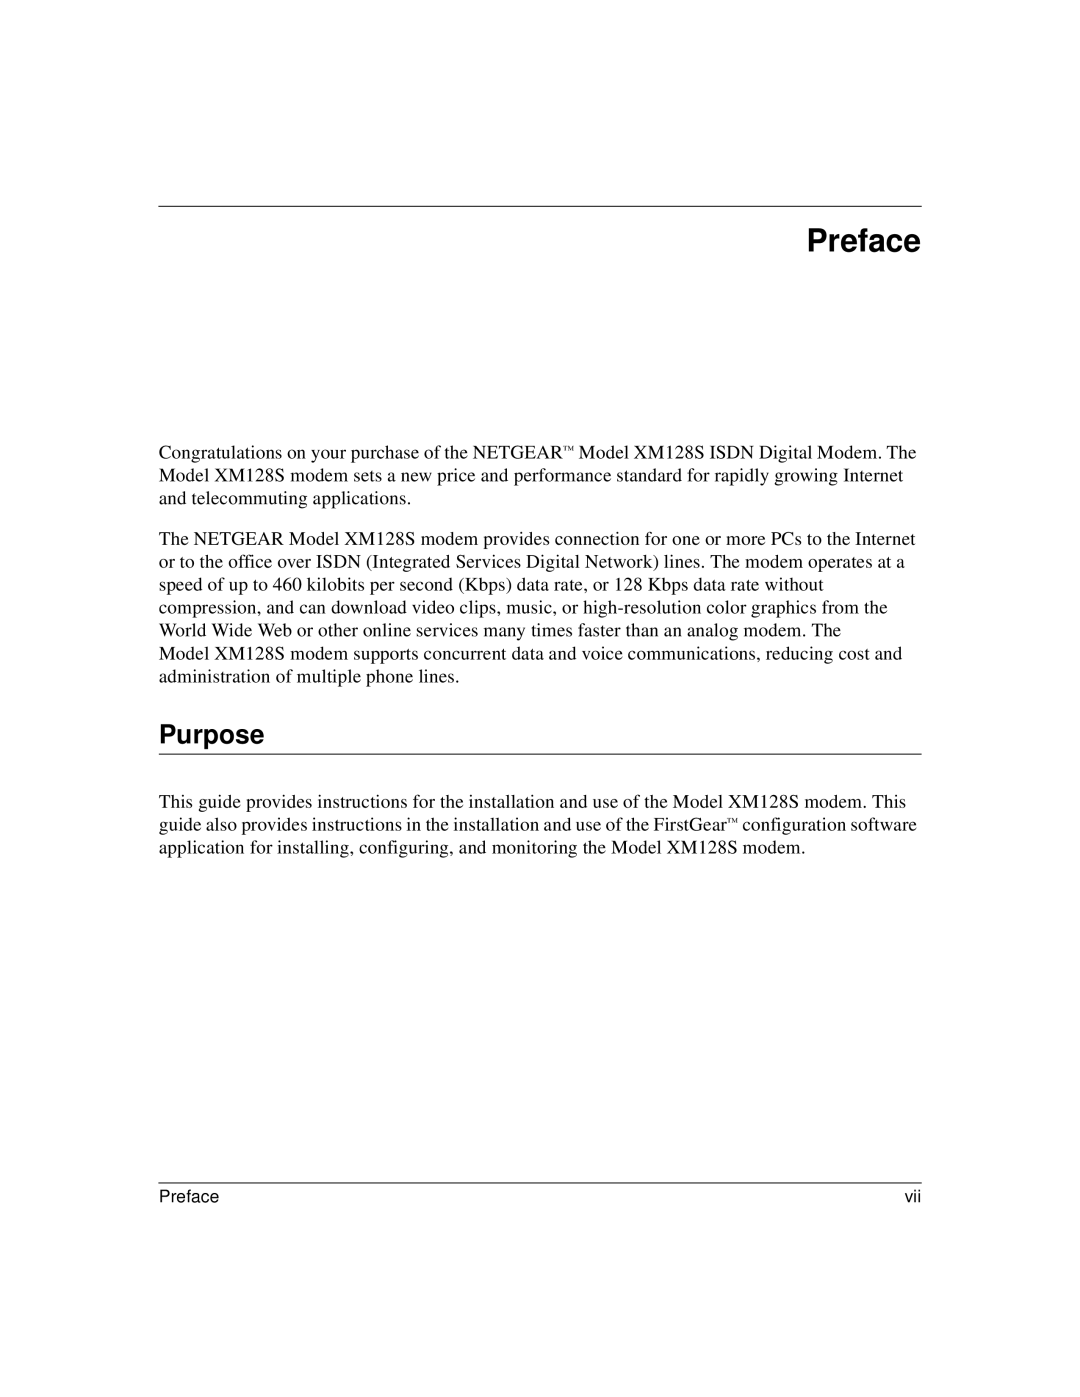 NETGEAR XM128S manual Preface, Purpose 